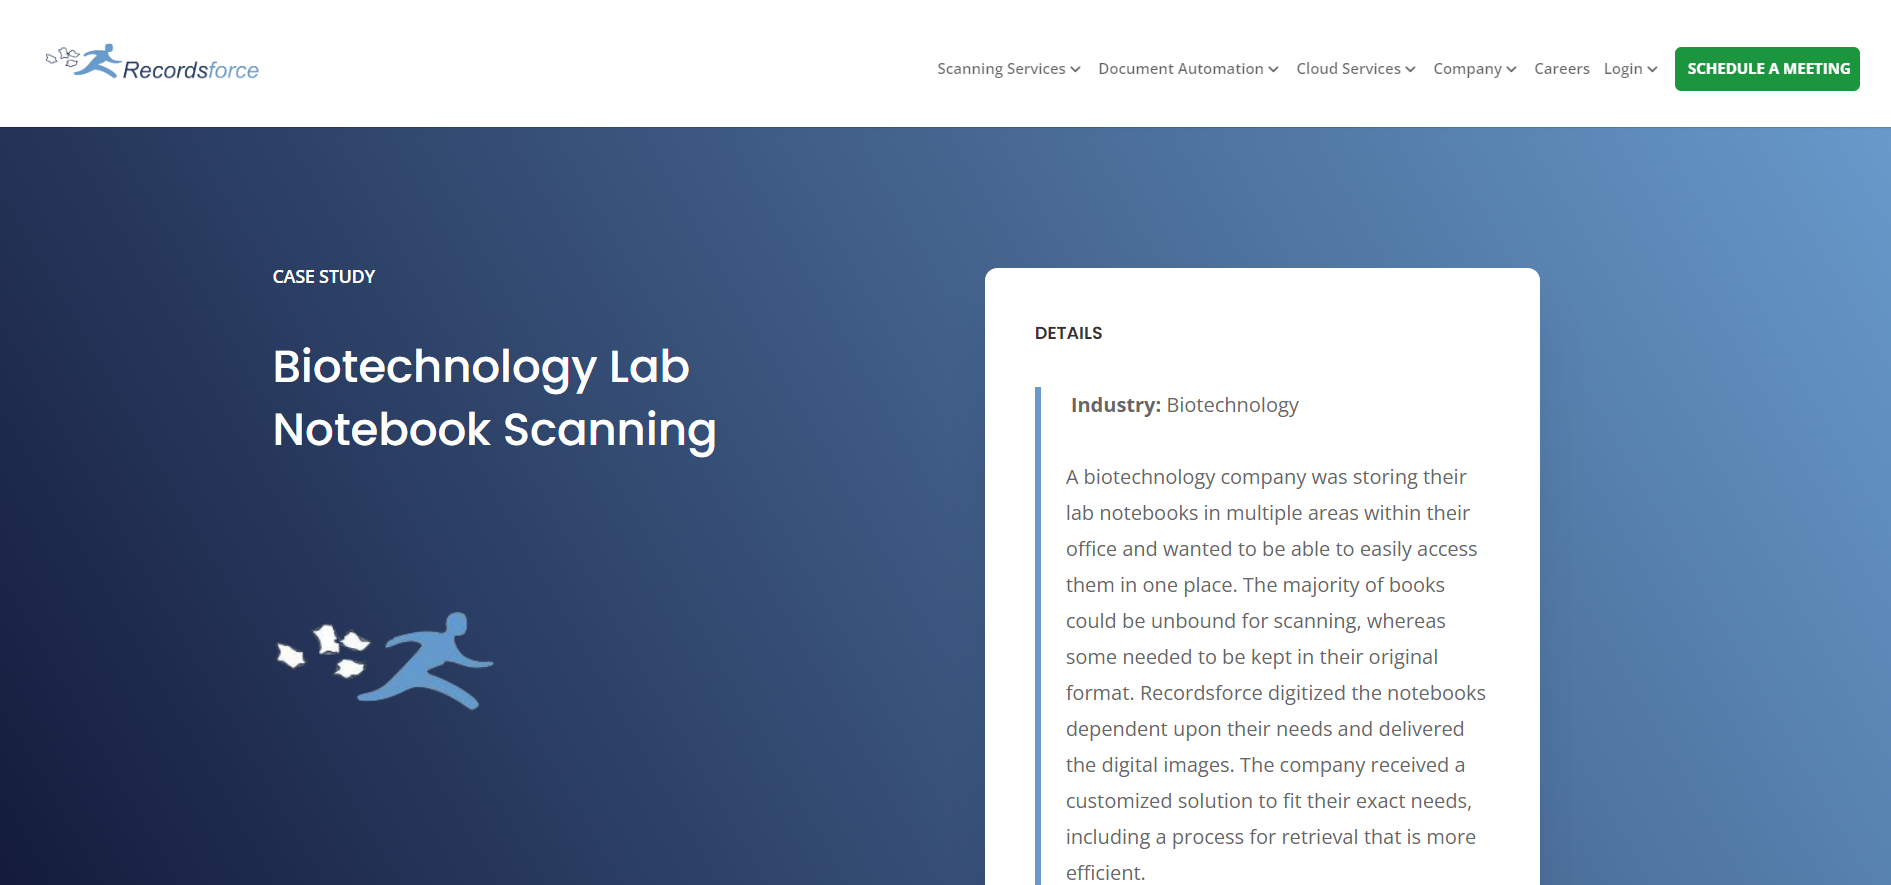 biotech lab notebook scanning case study